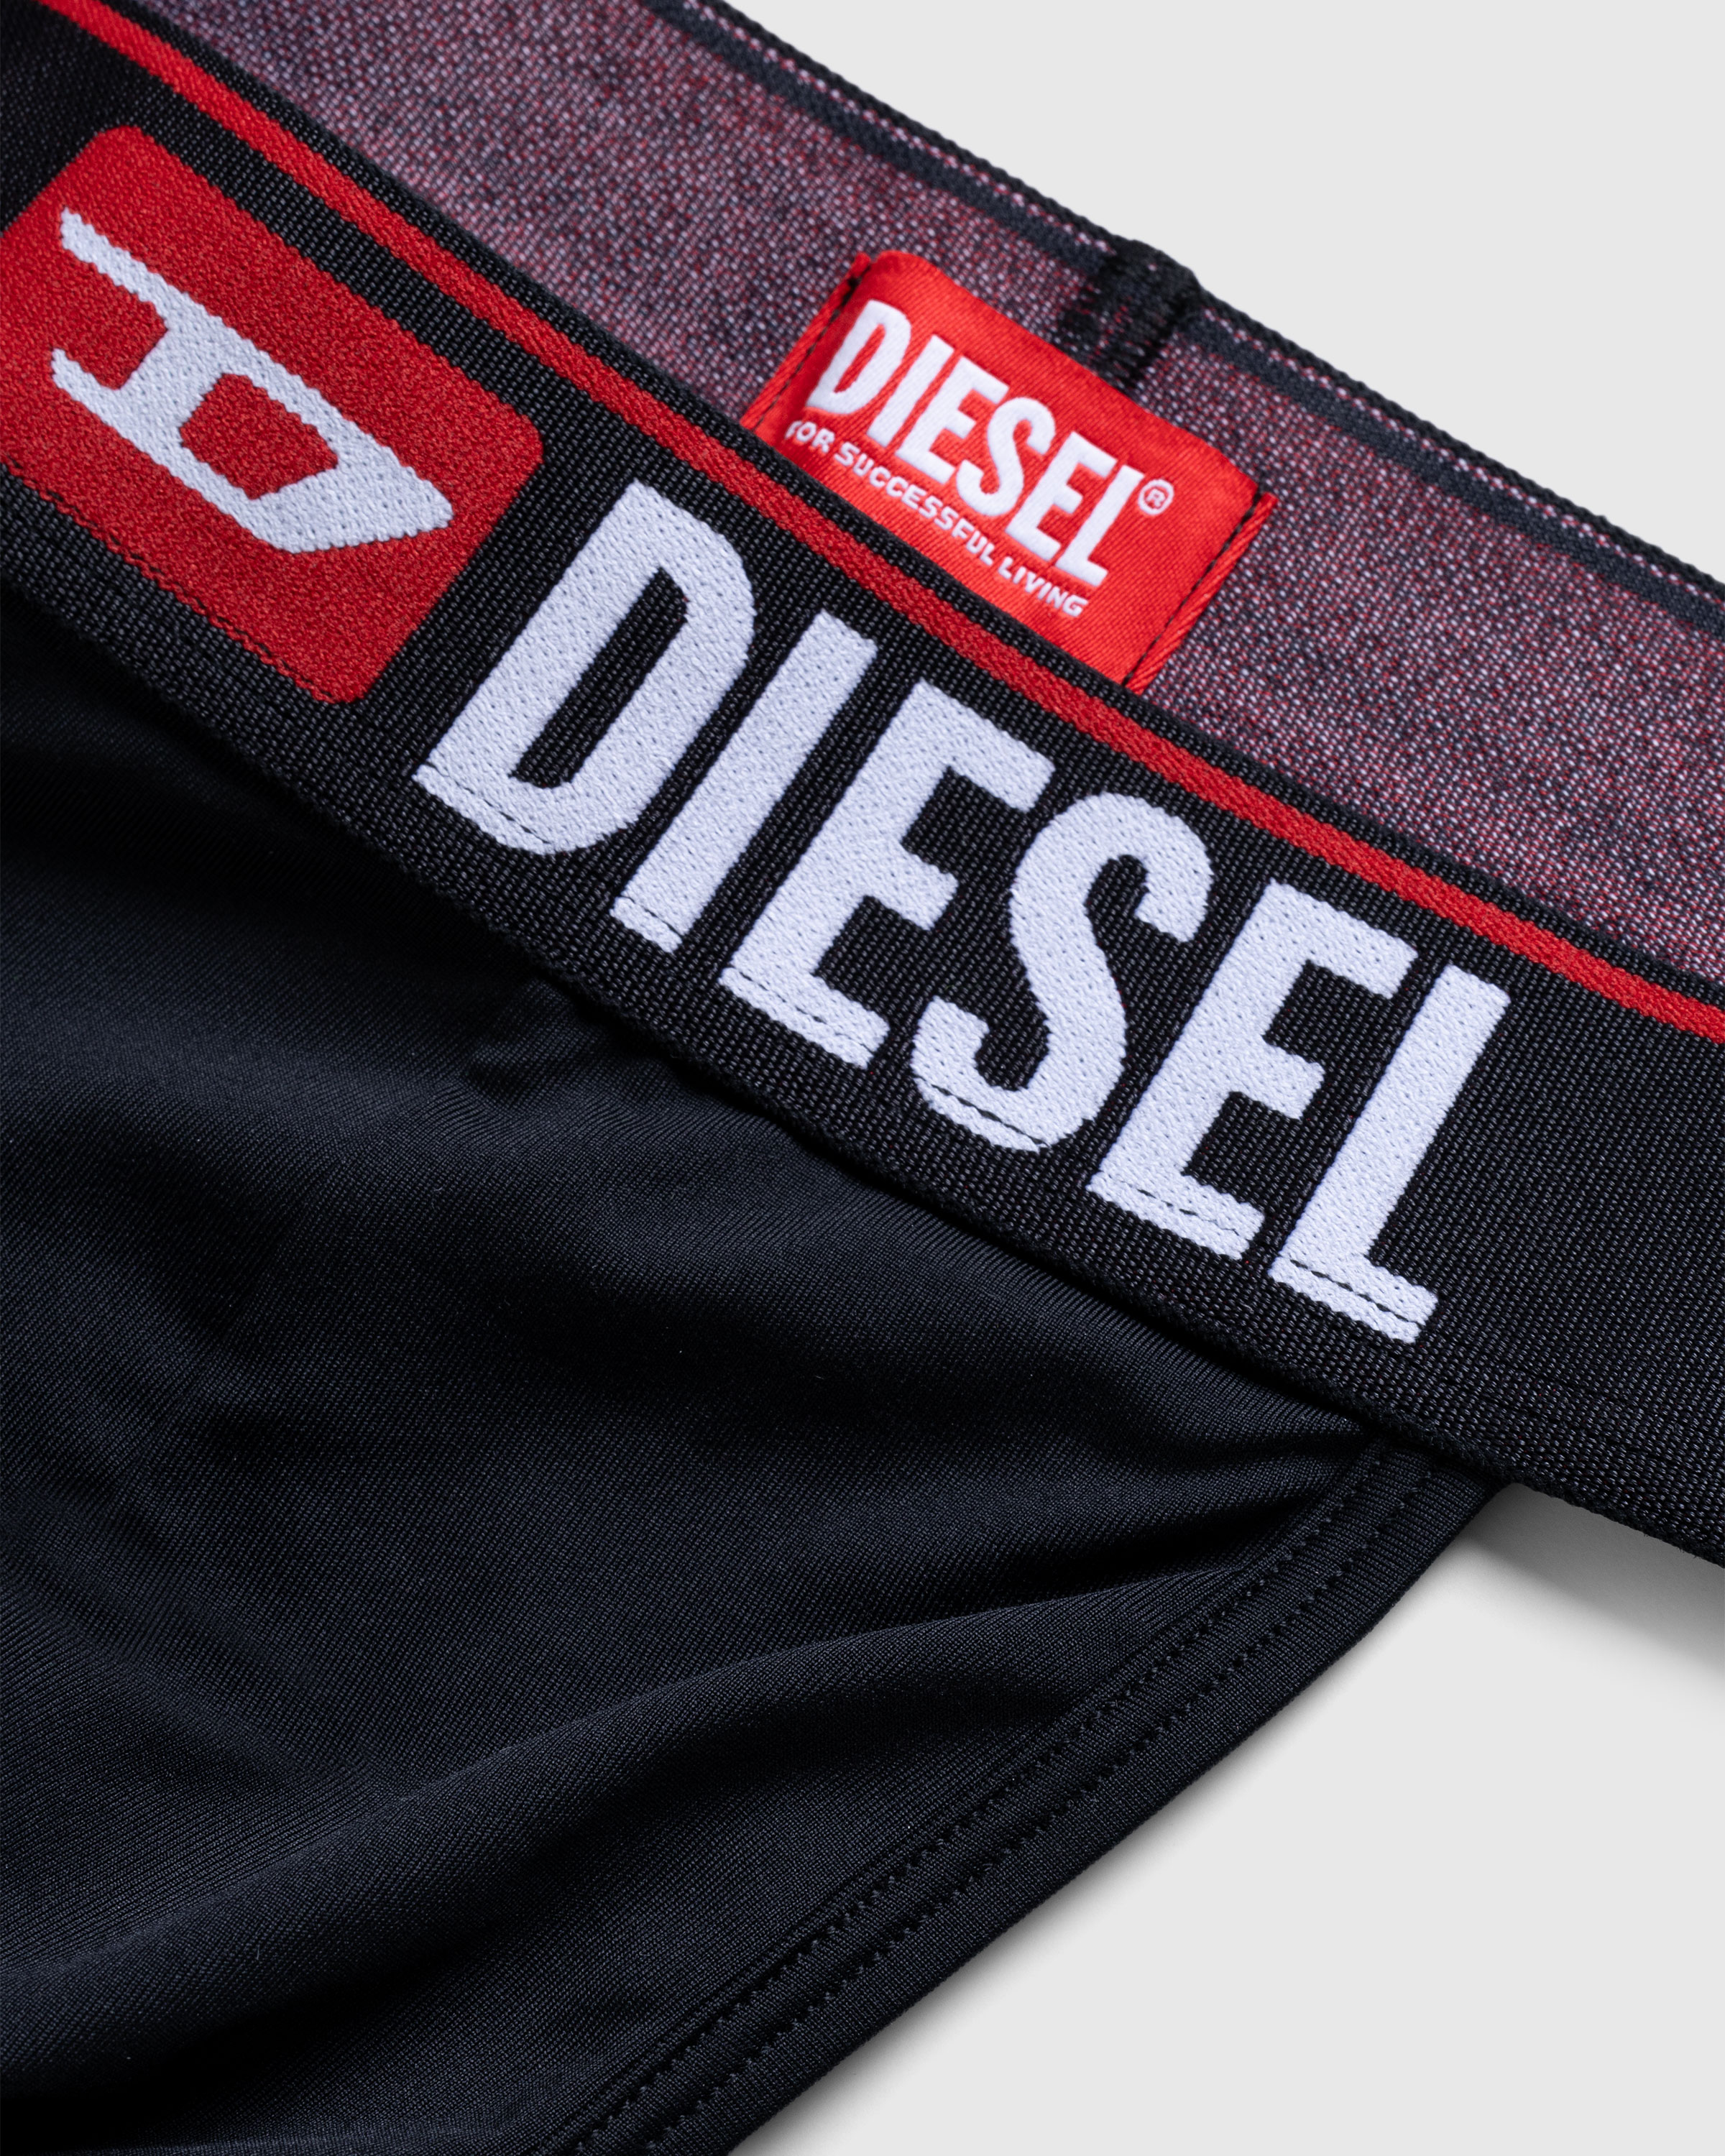 Diesel – Umbr-Jocky Three-Pack Jockstraps Black - Underwear & Loungewear - Black - Image 3